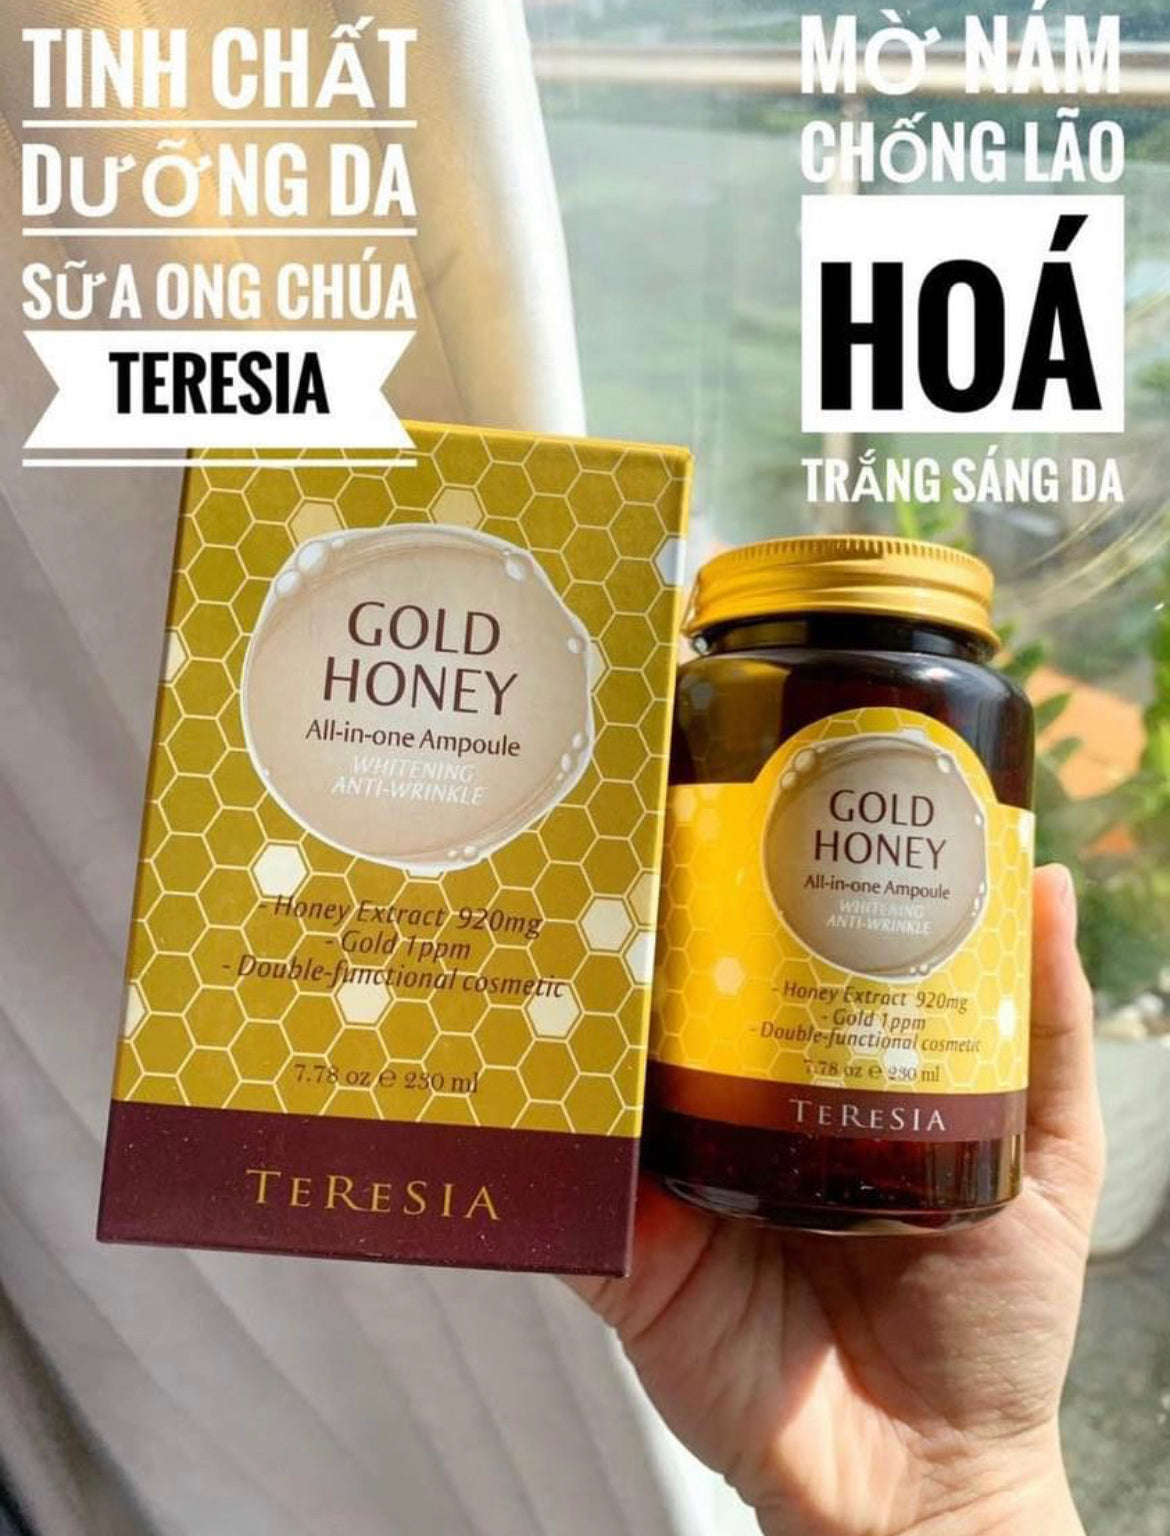 Tinh chat sua ong chua Gold honey teresia